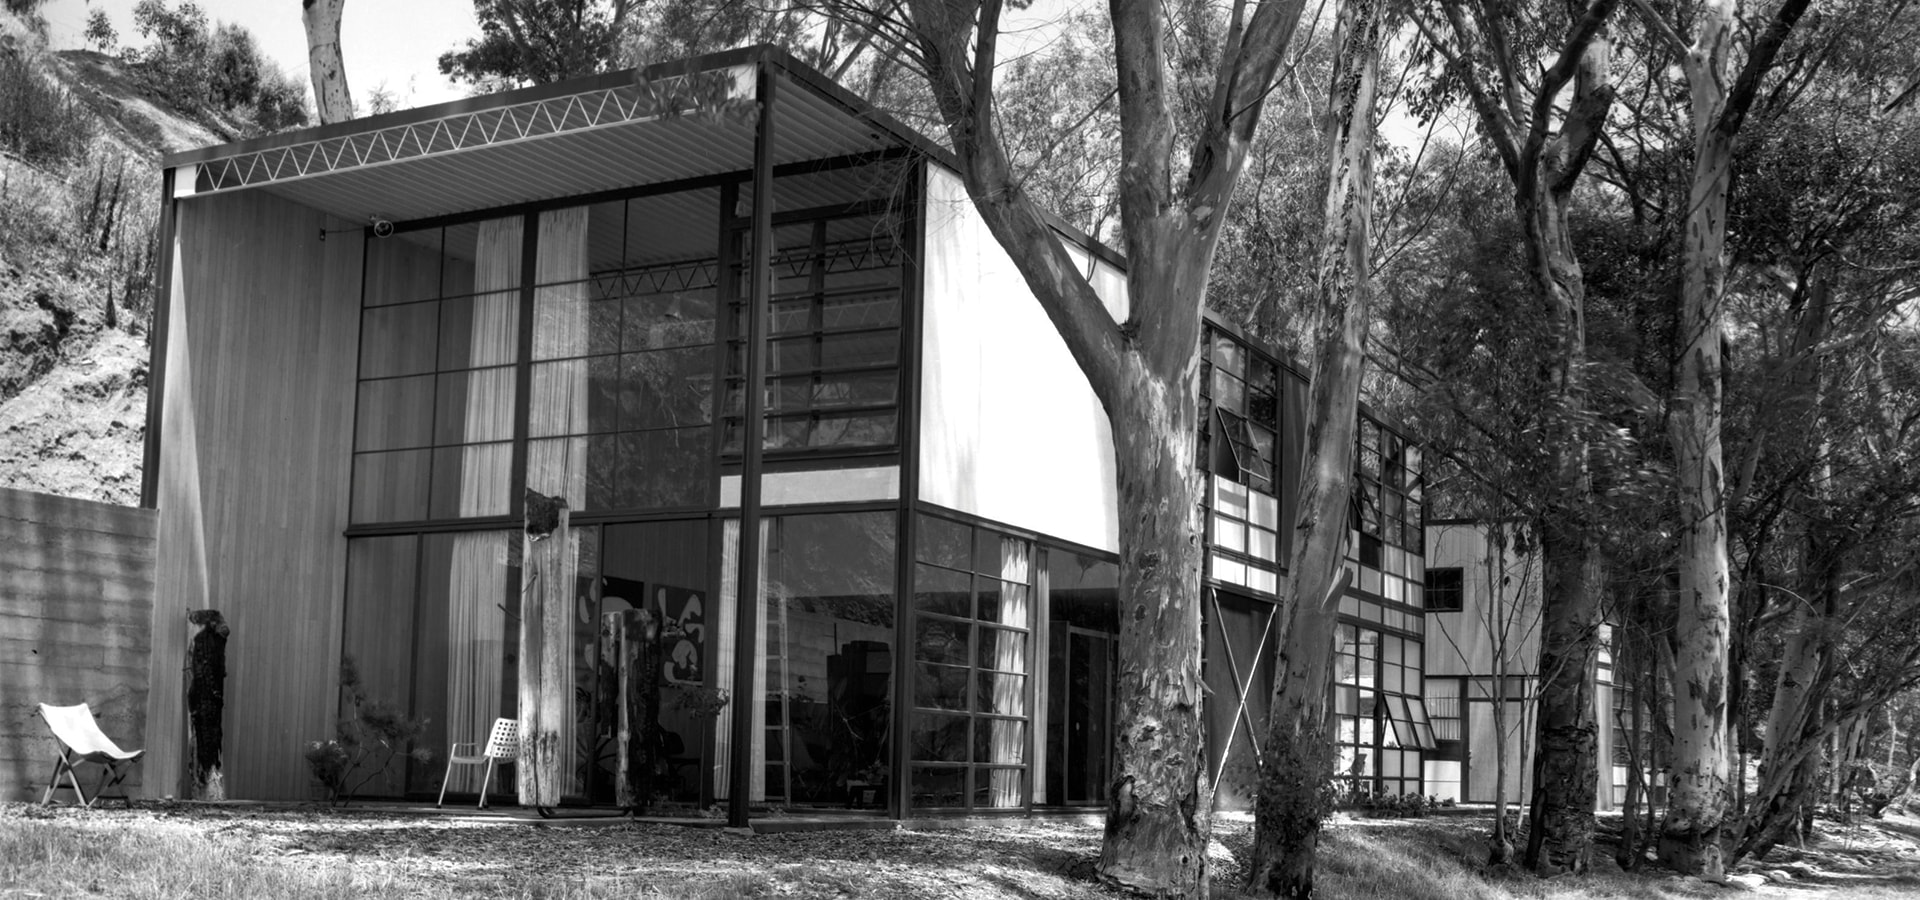 How the Case Study House Program Inspired a California Modernist